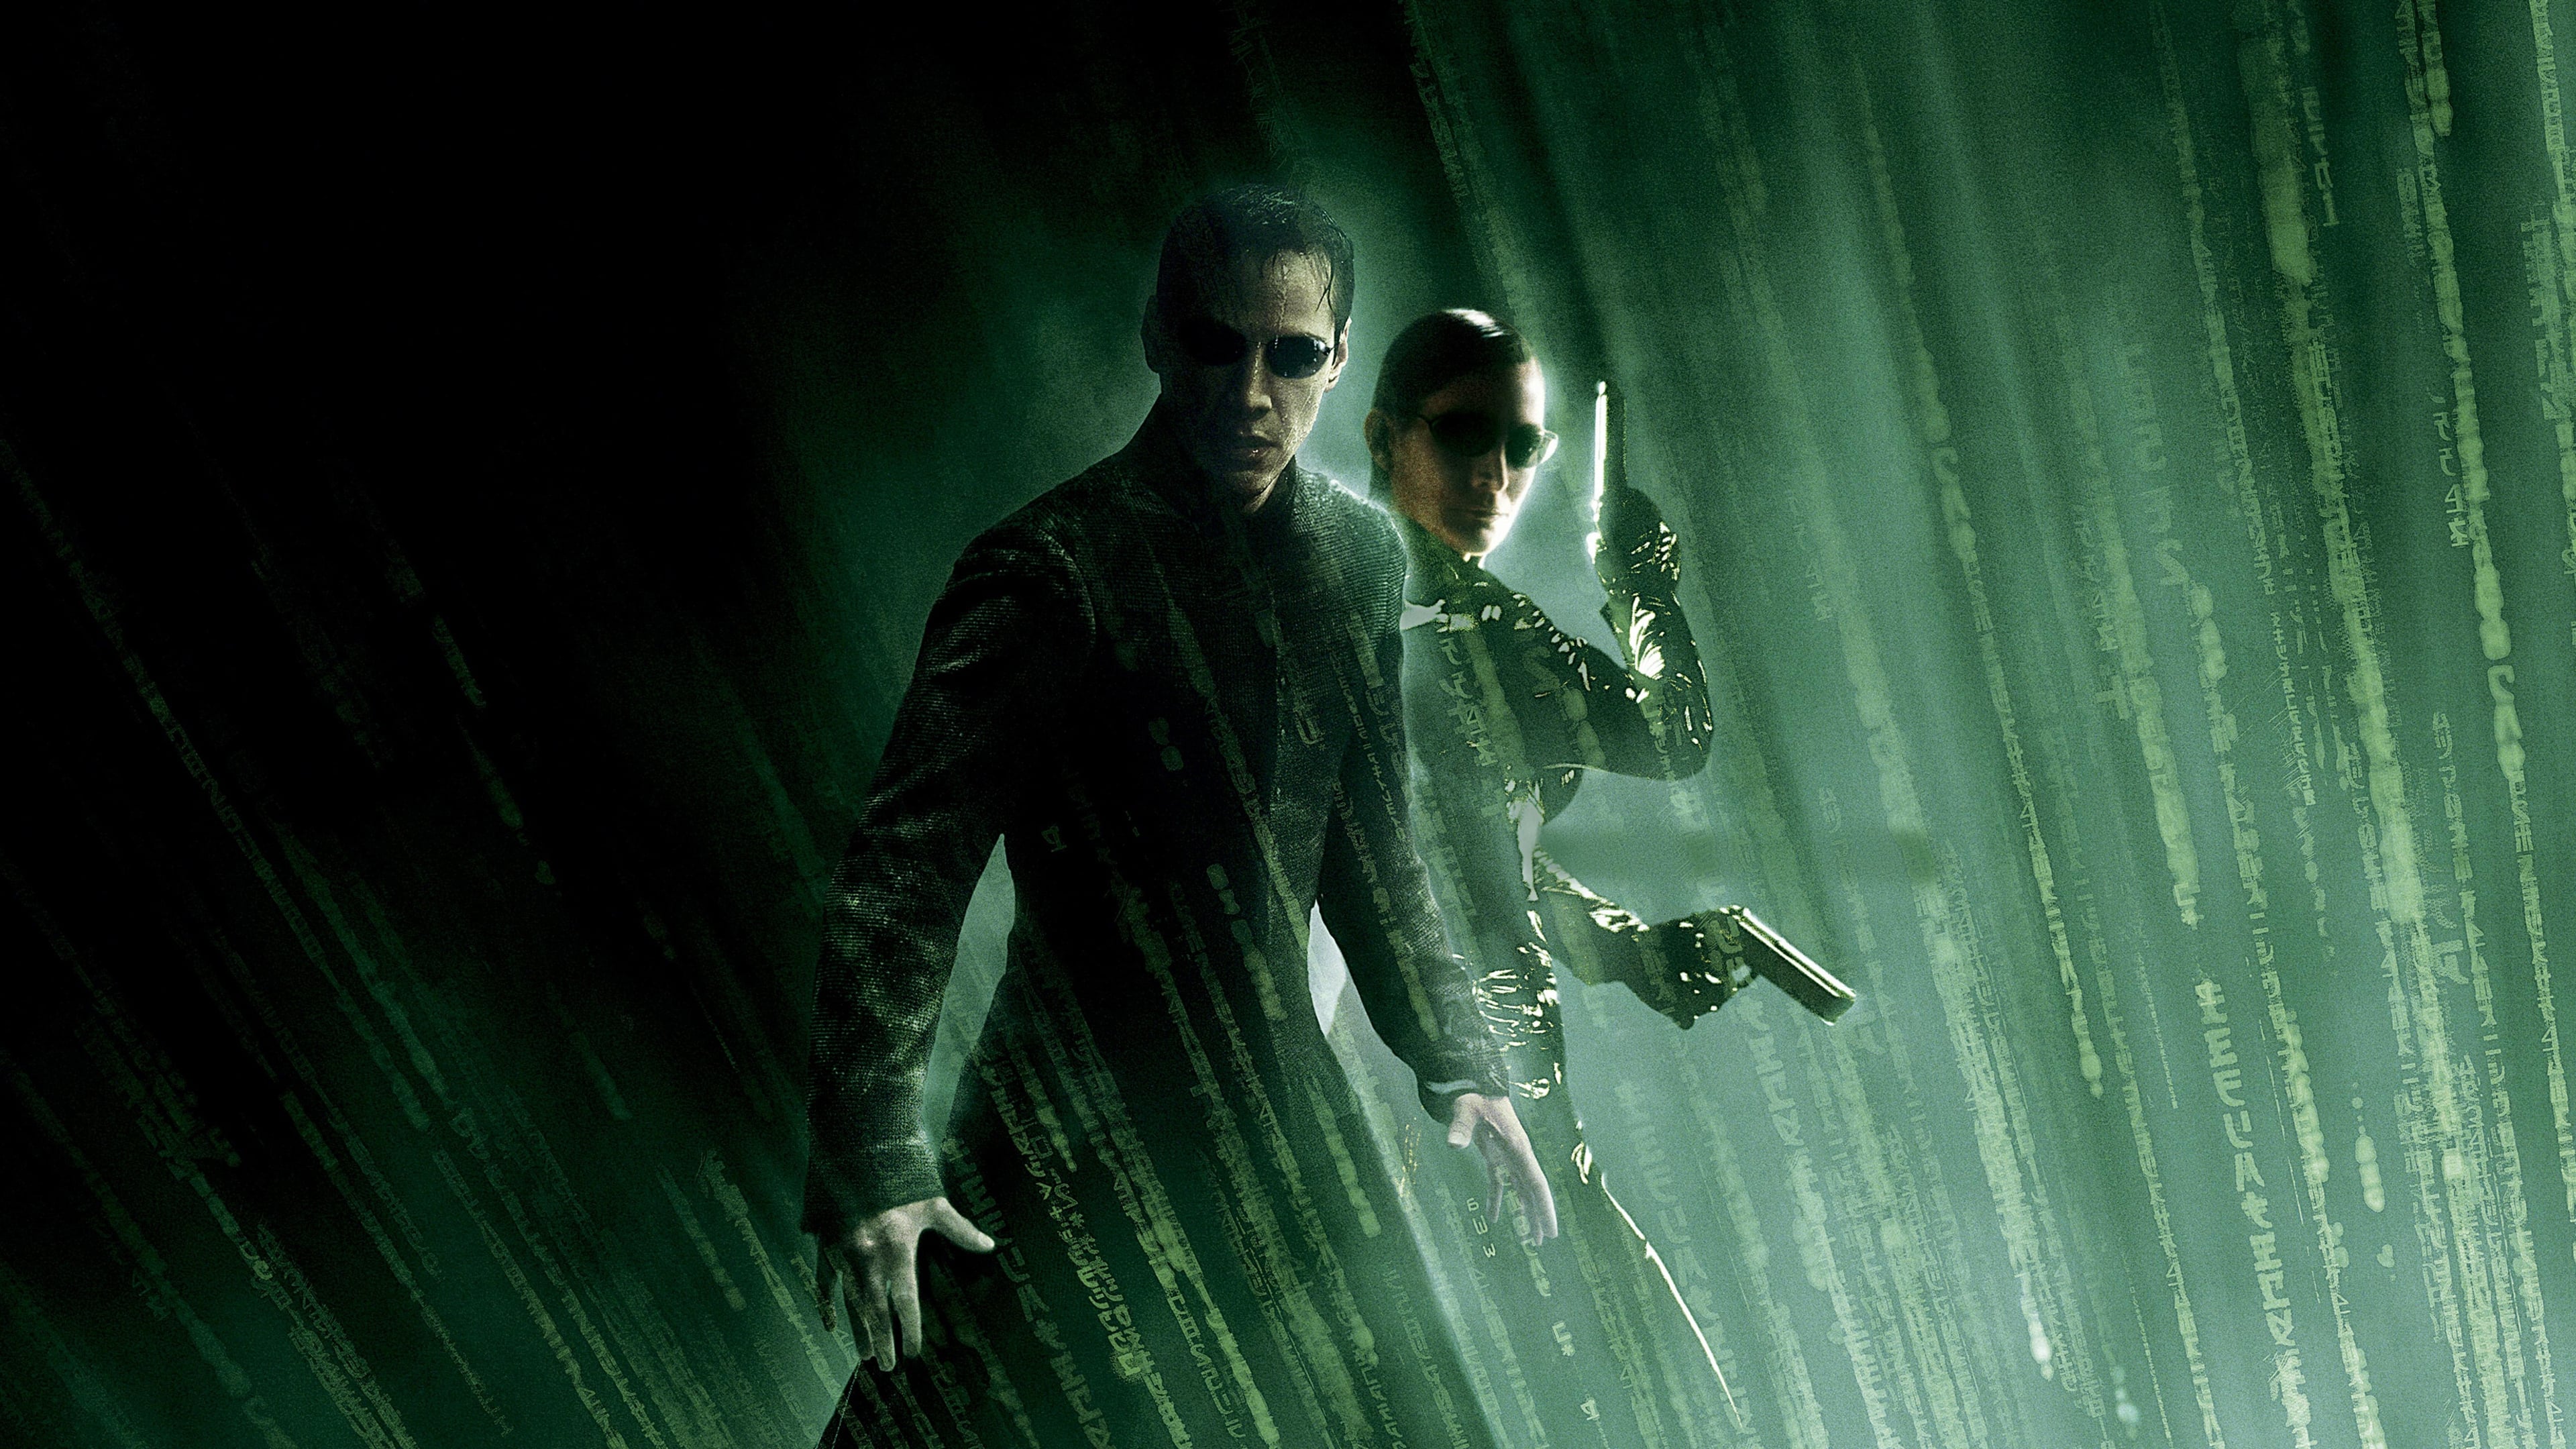 Ma trận: cuộc cách mạng - The matrix revolutions